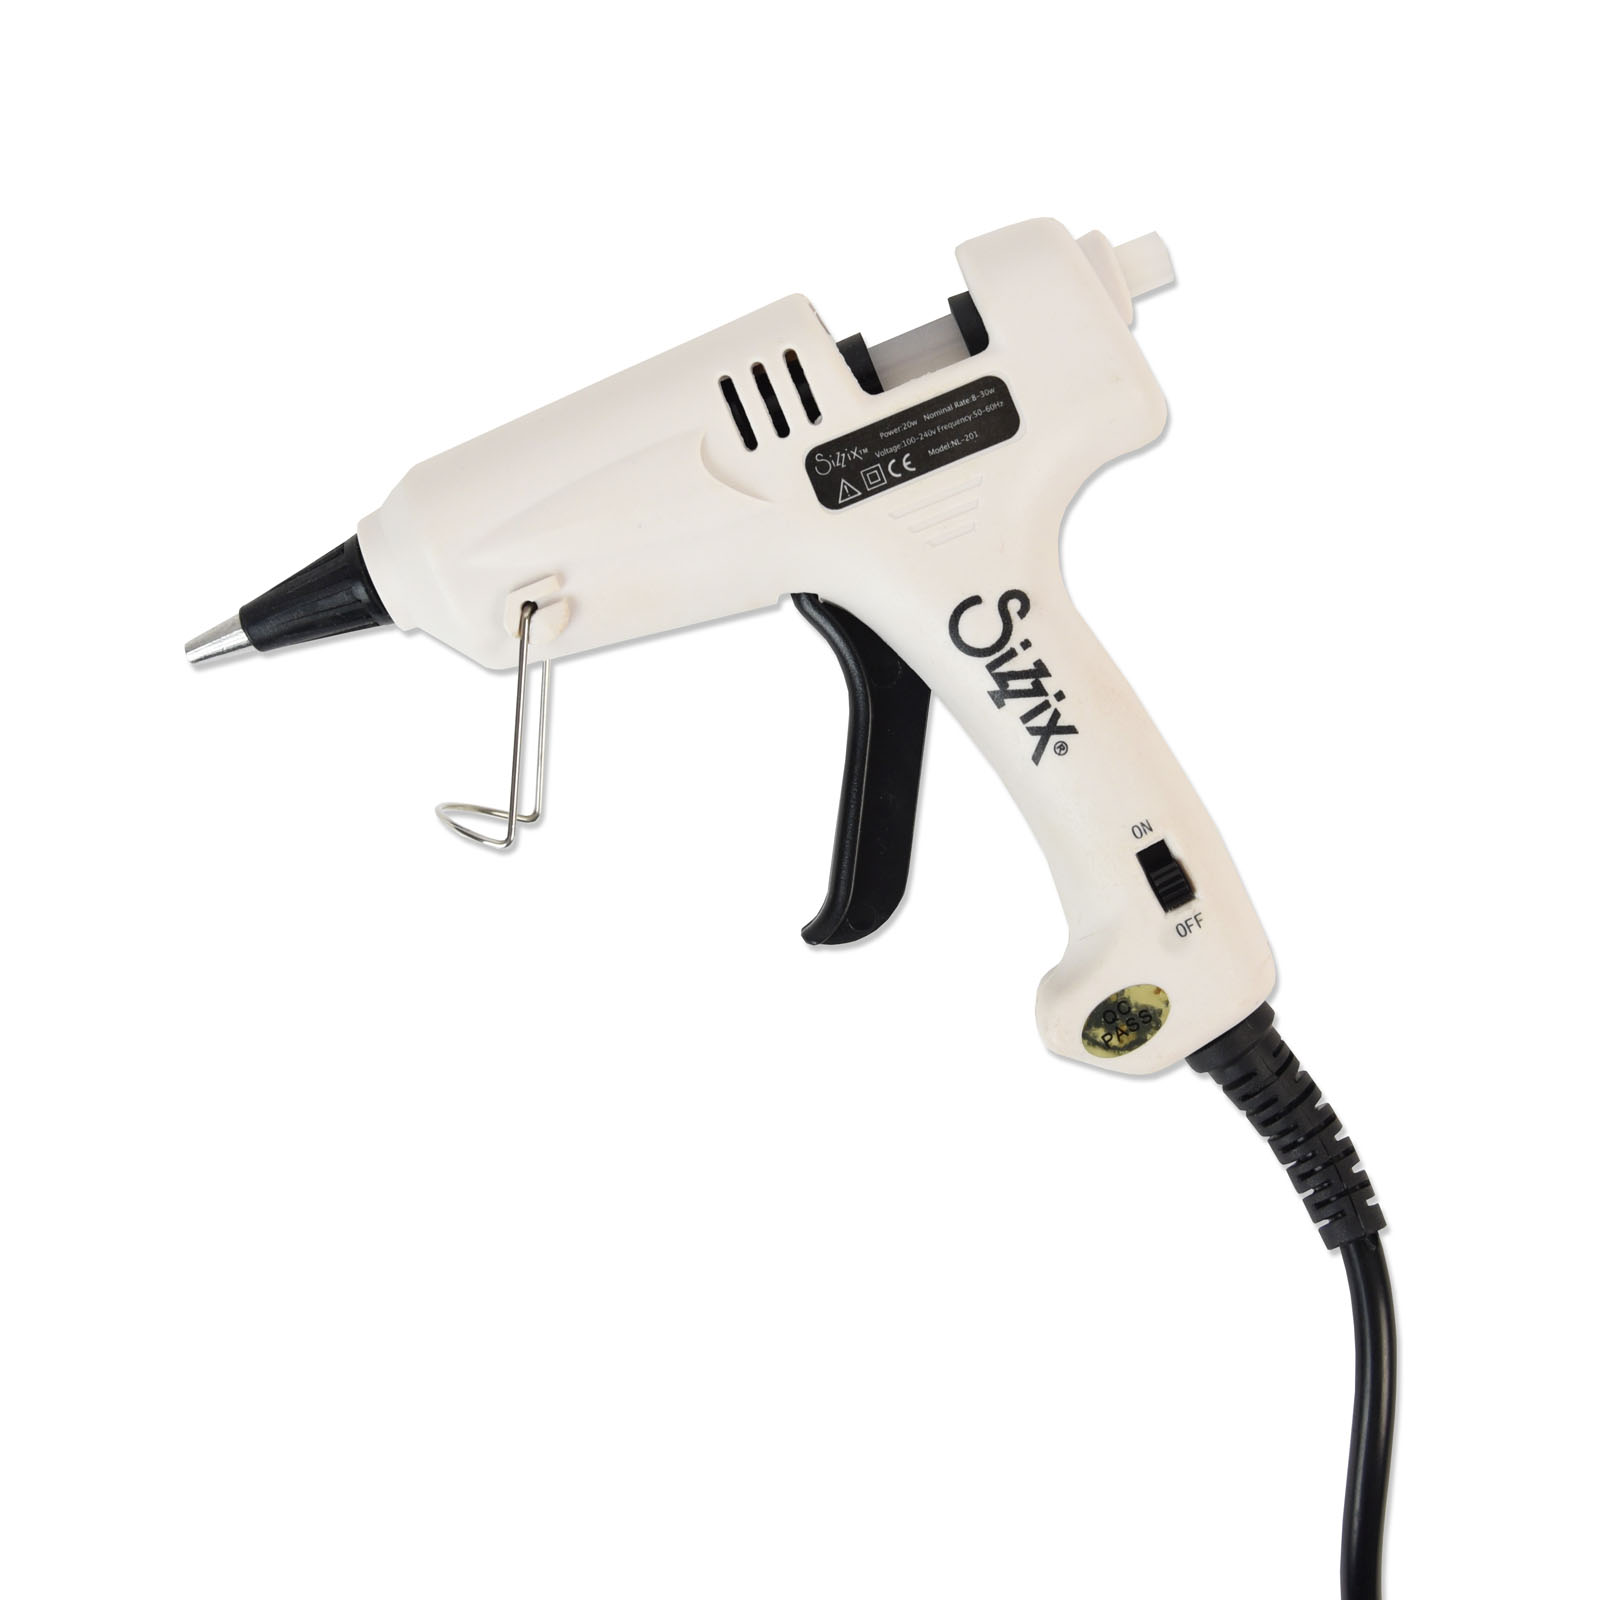 Sizzix • Making Tool Glue Gun (UK Version w/EU Adapter)